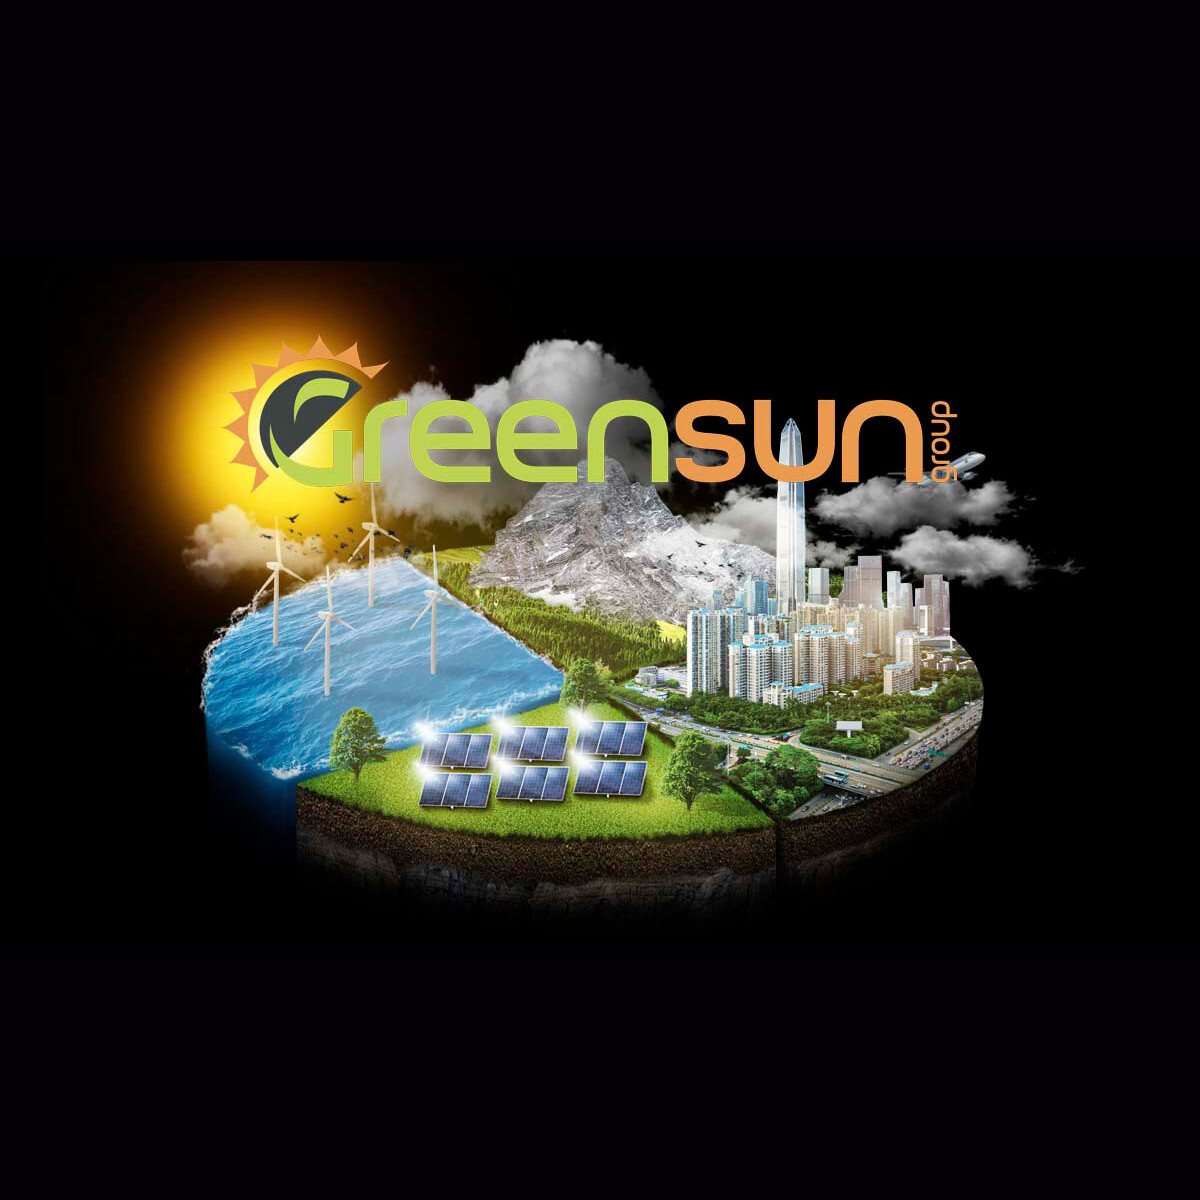 Greensun Group